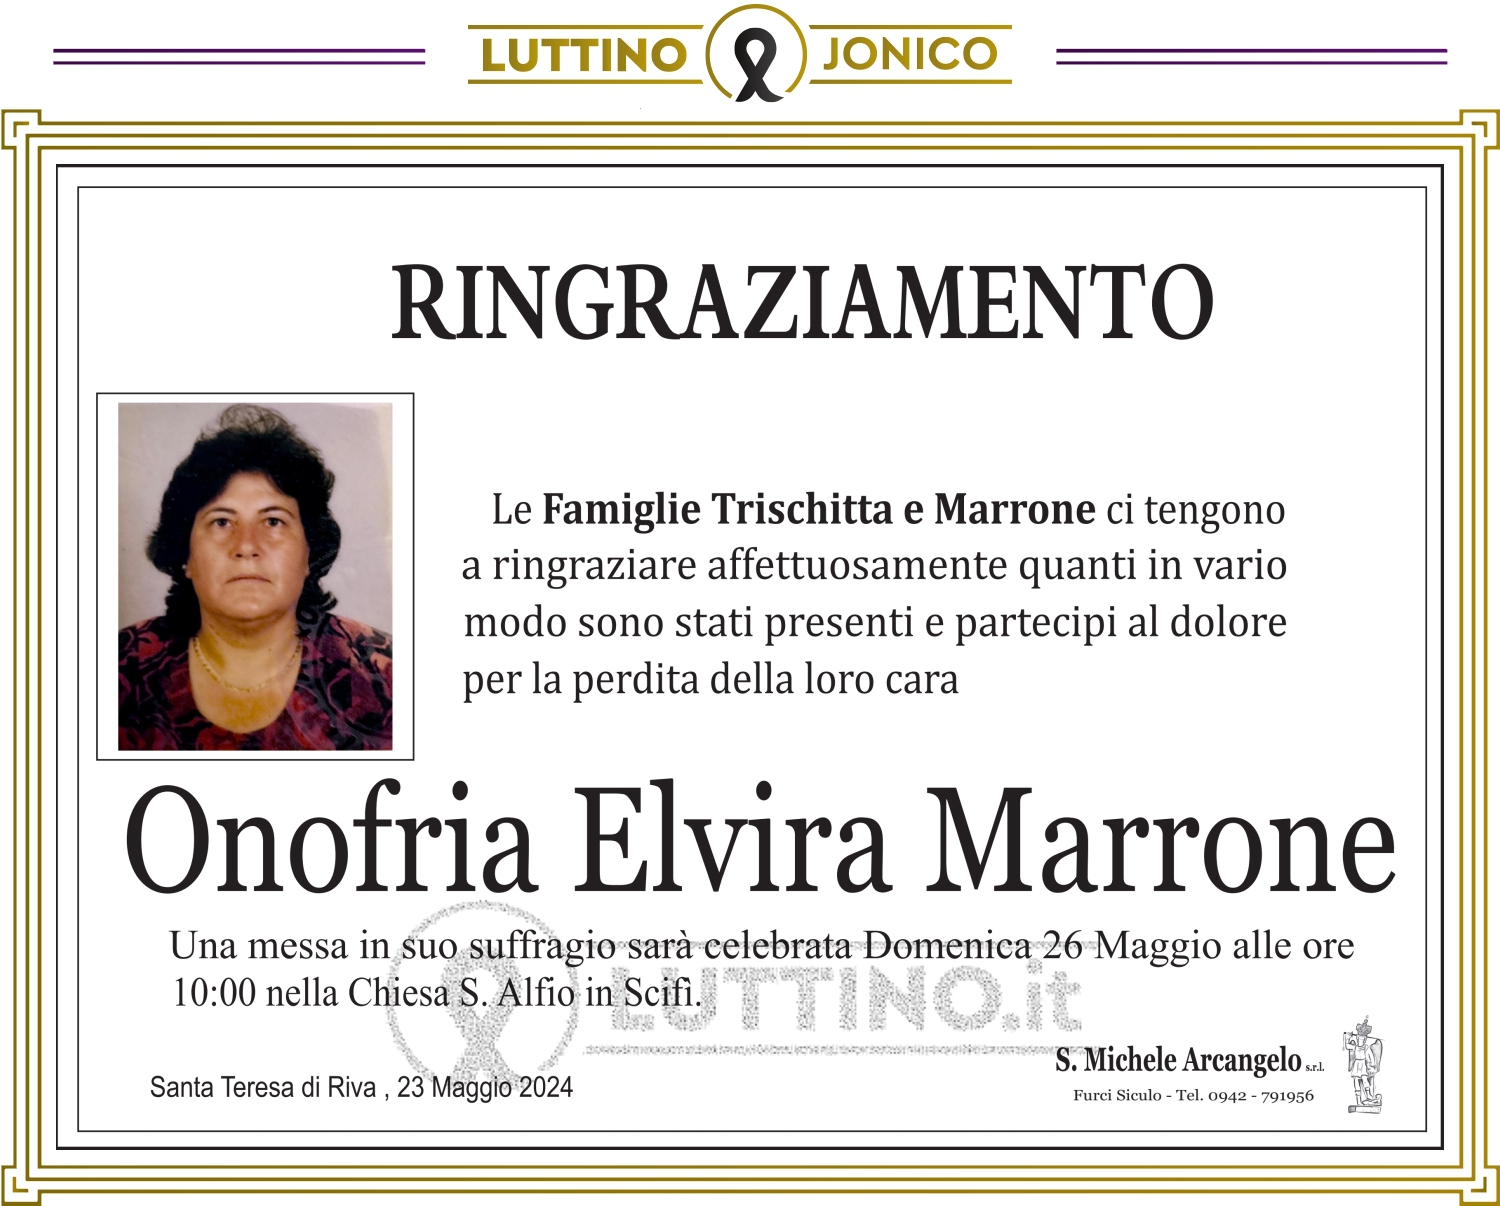 Onofria Elvira Marrone